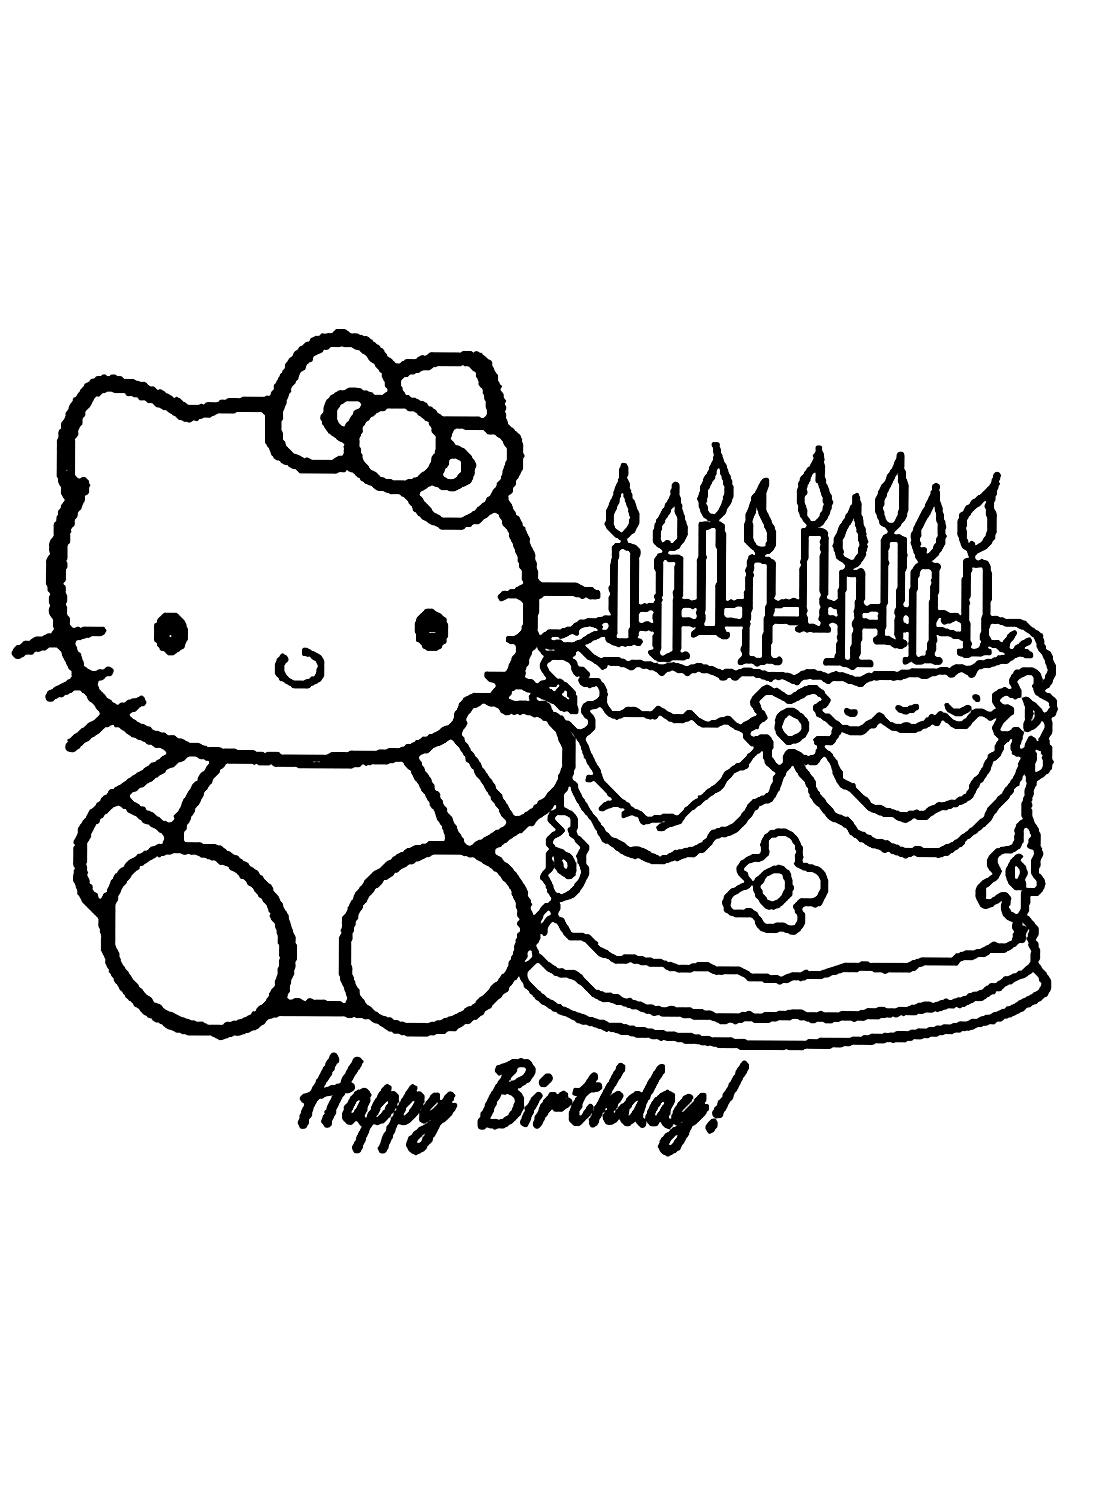 Le joyeux anniversaire Hello Kitty de Hello Kitty